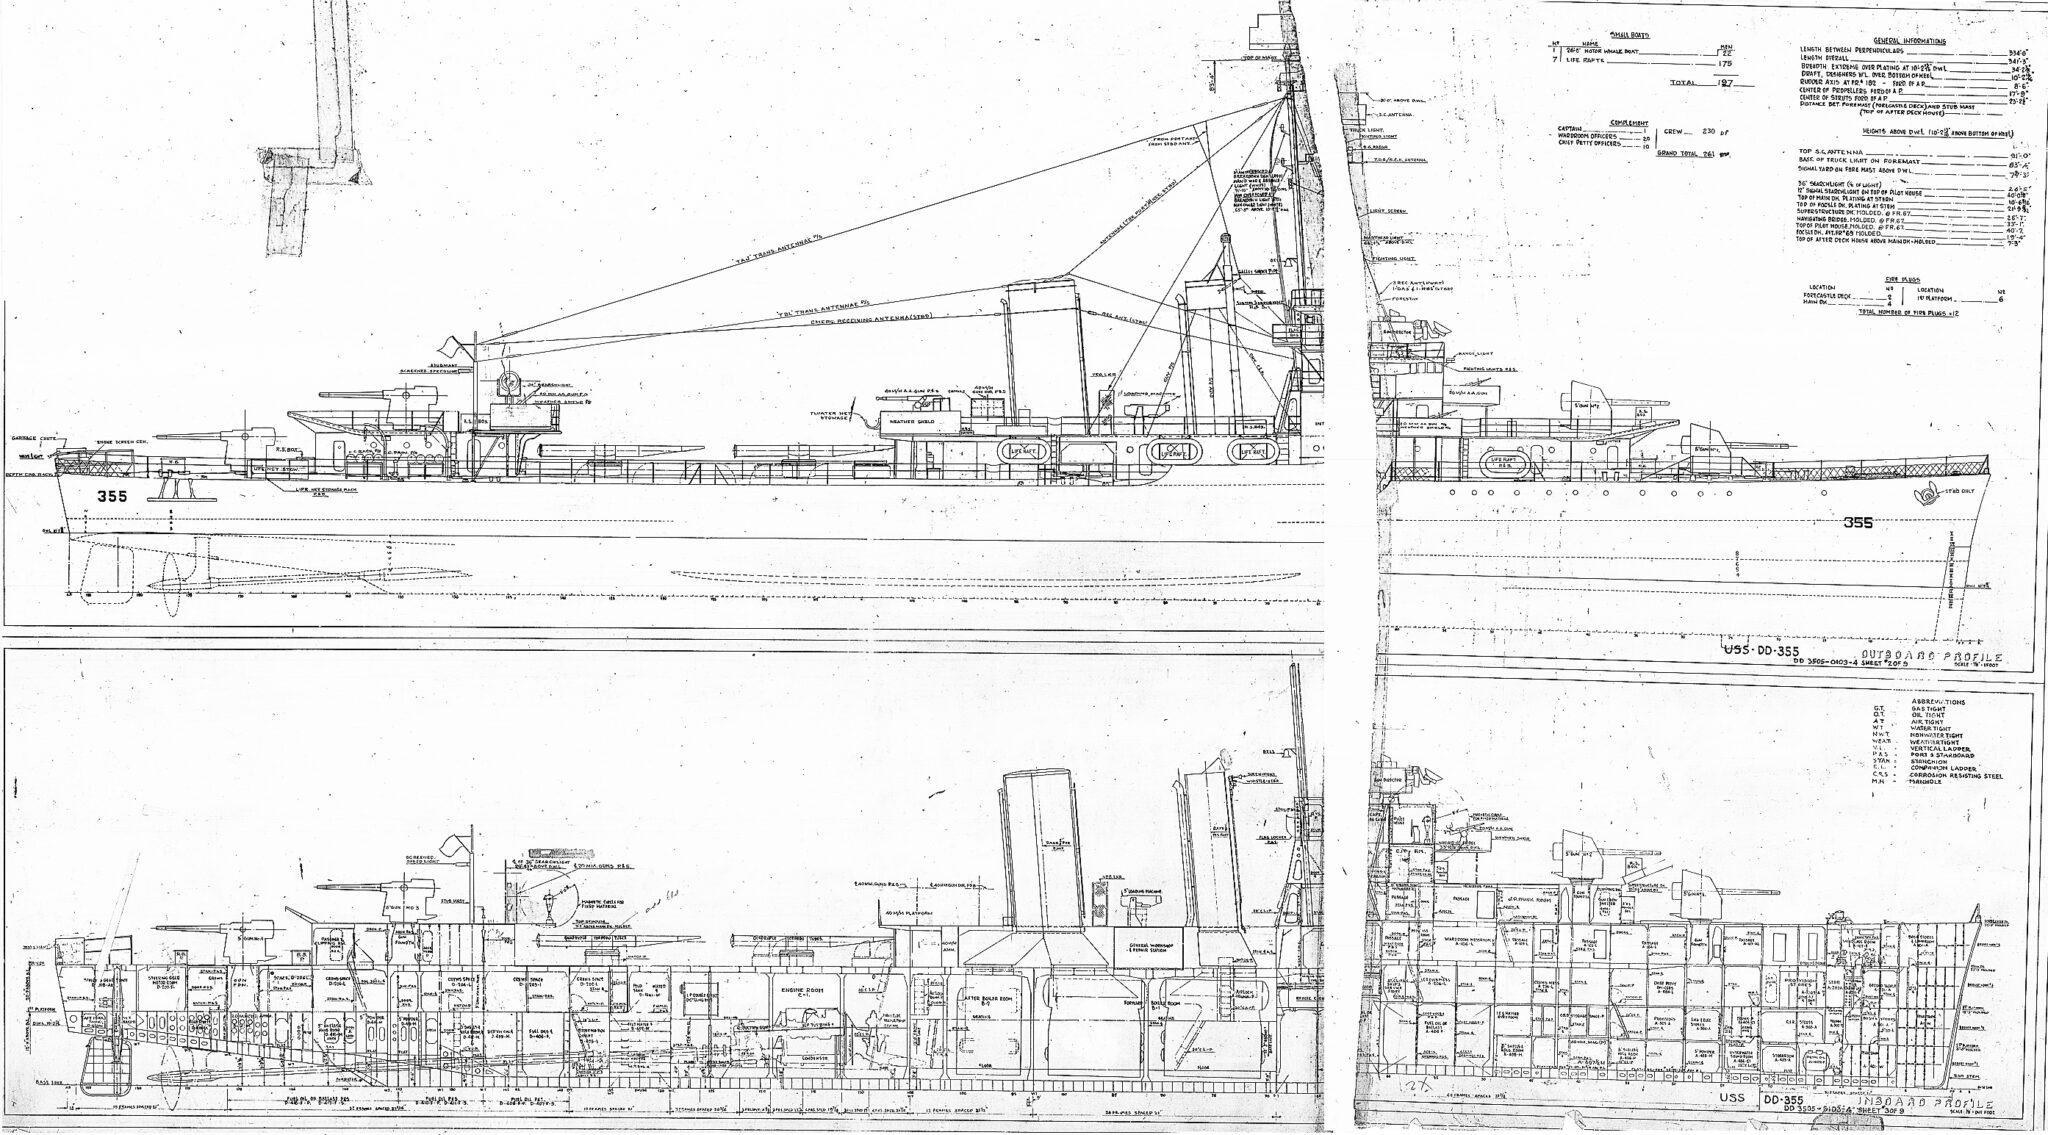 Farragut Class Destroyers 1934